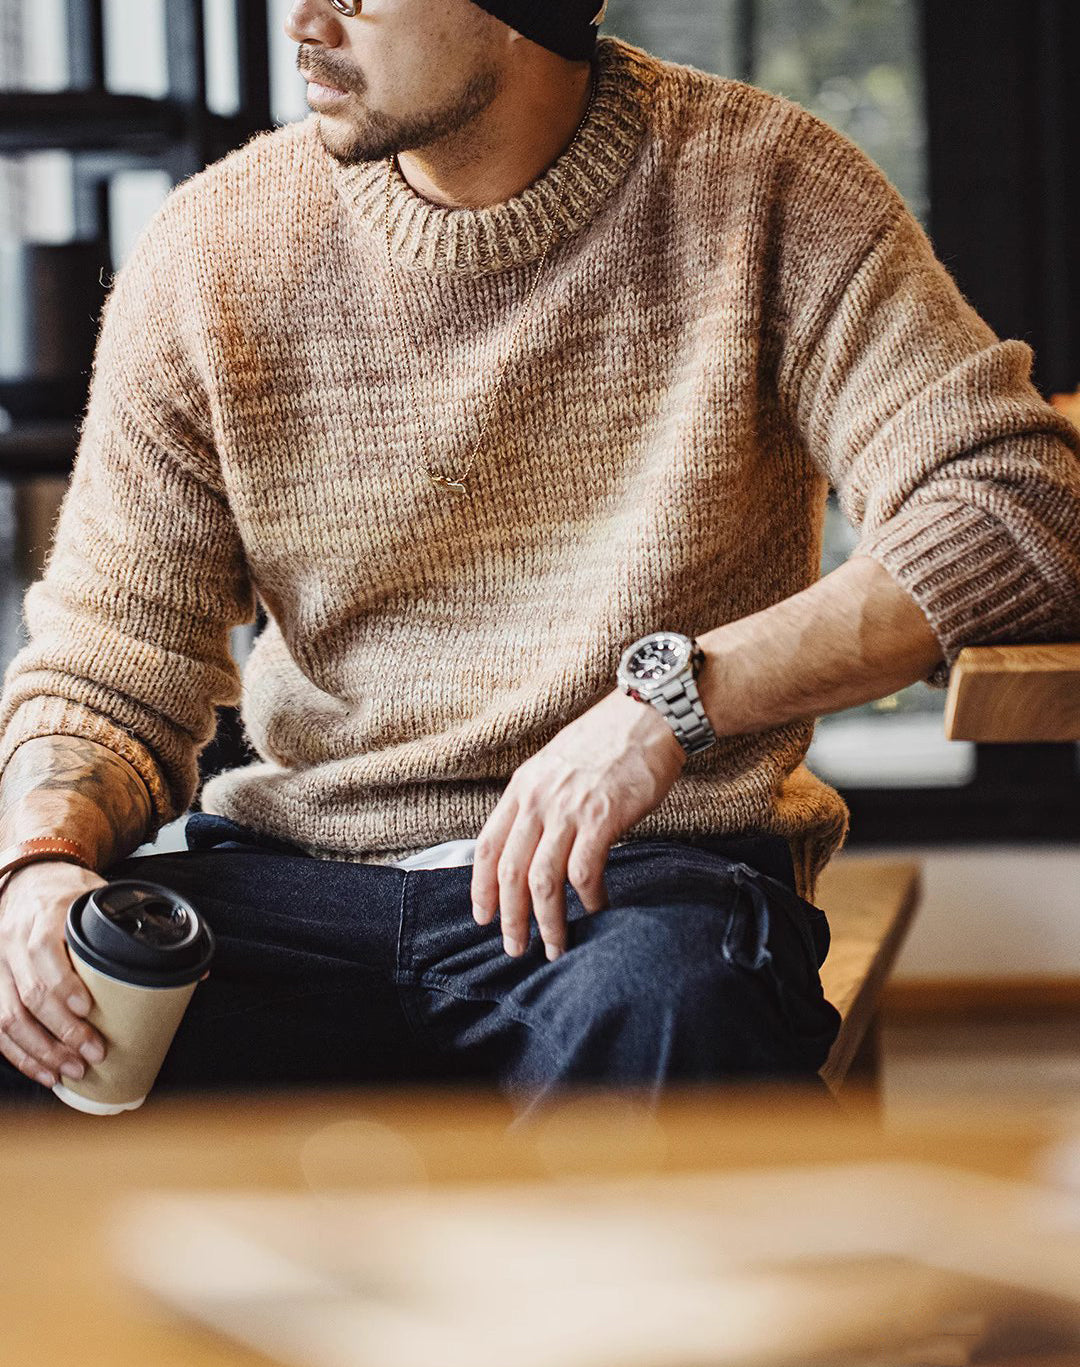 American Retro Striped Maillard Pullover Blended Men's Sweater